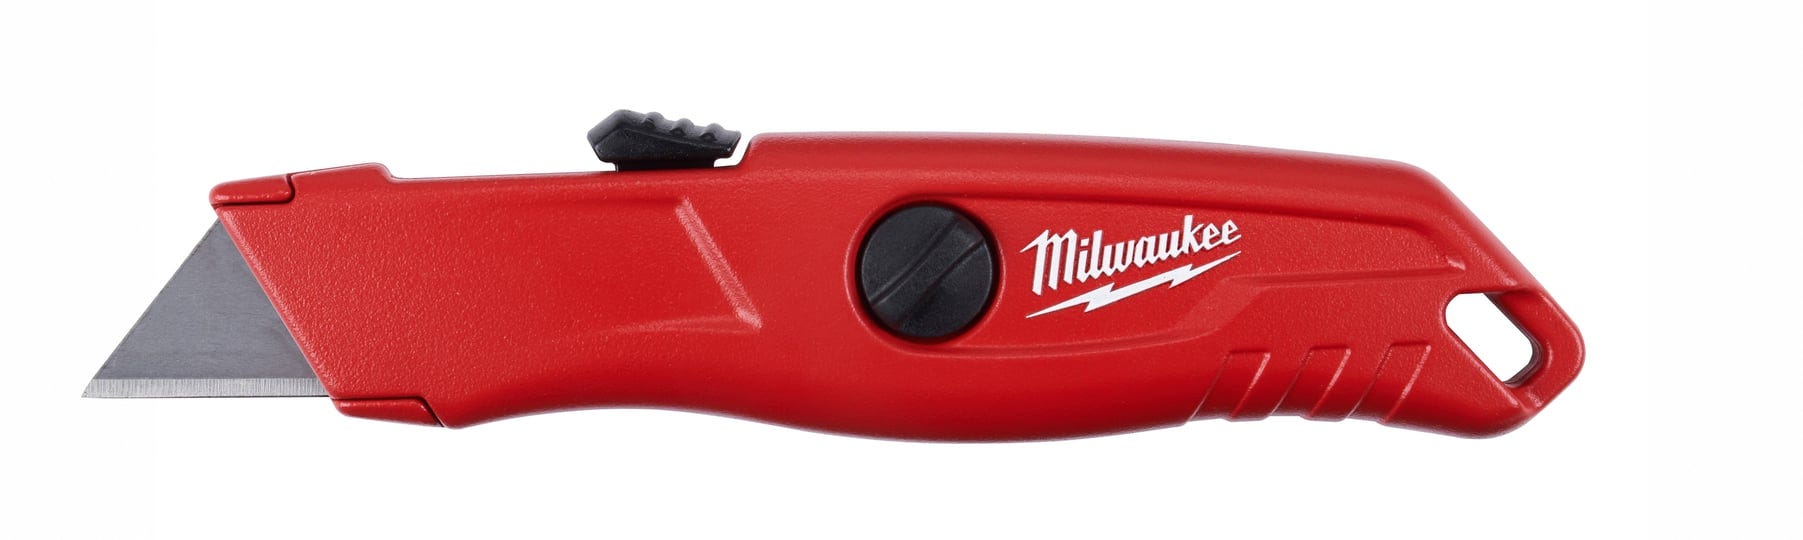 milwaukee-48-22-1512-self-retracting-utility-knife-1